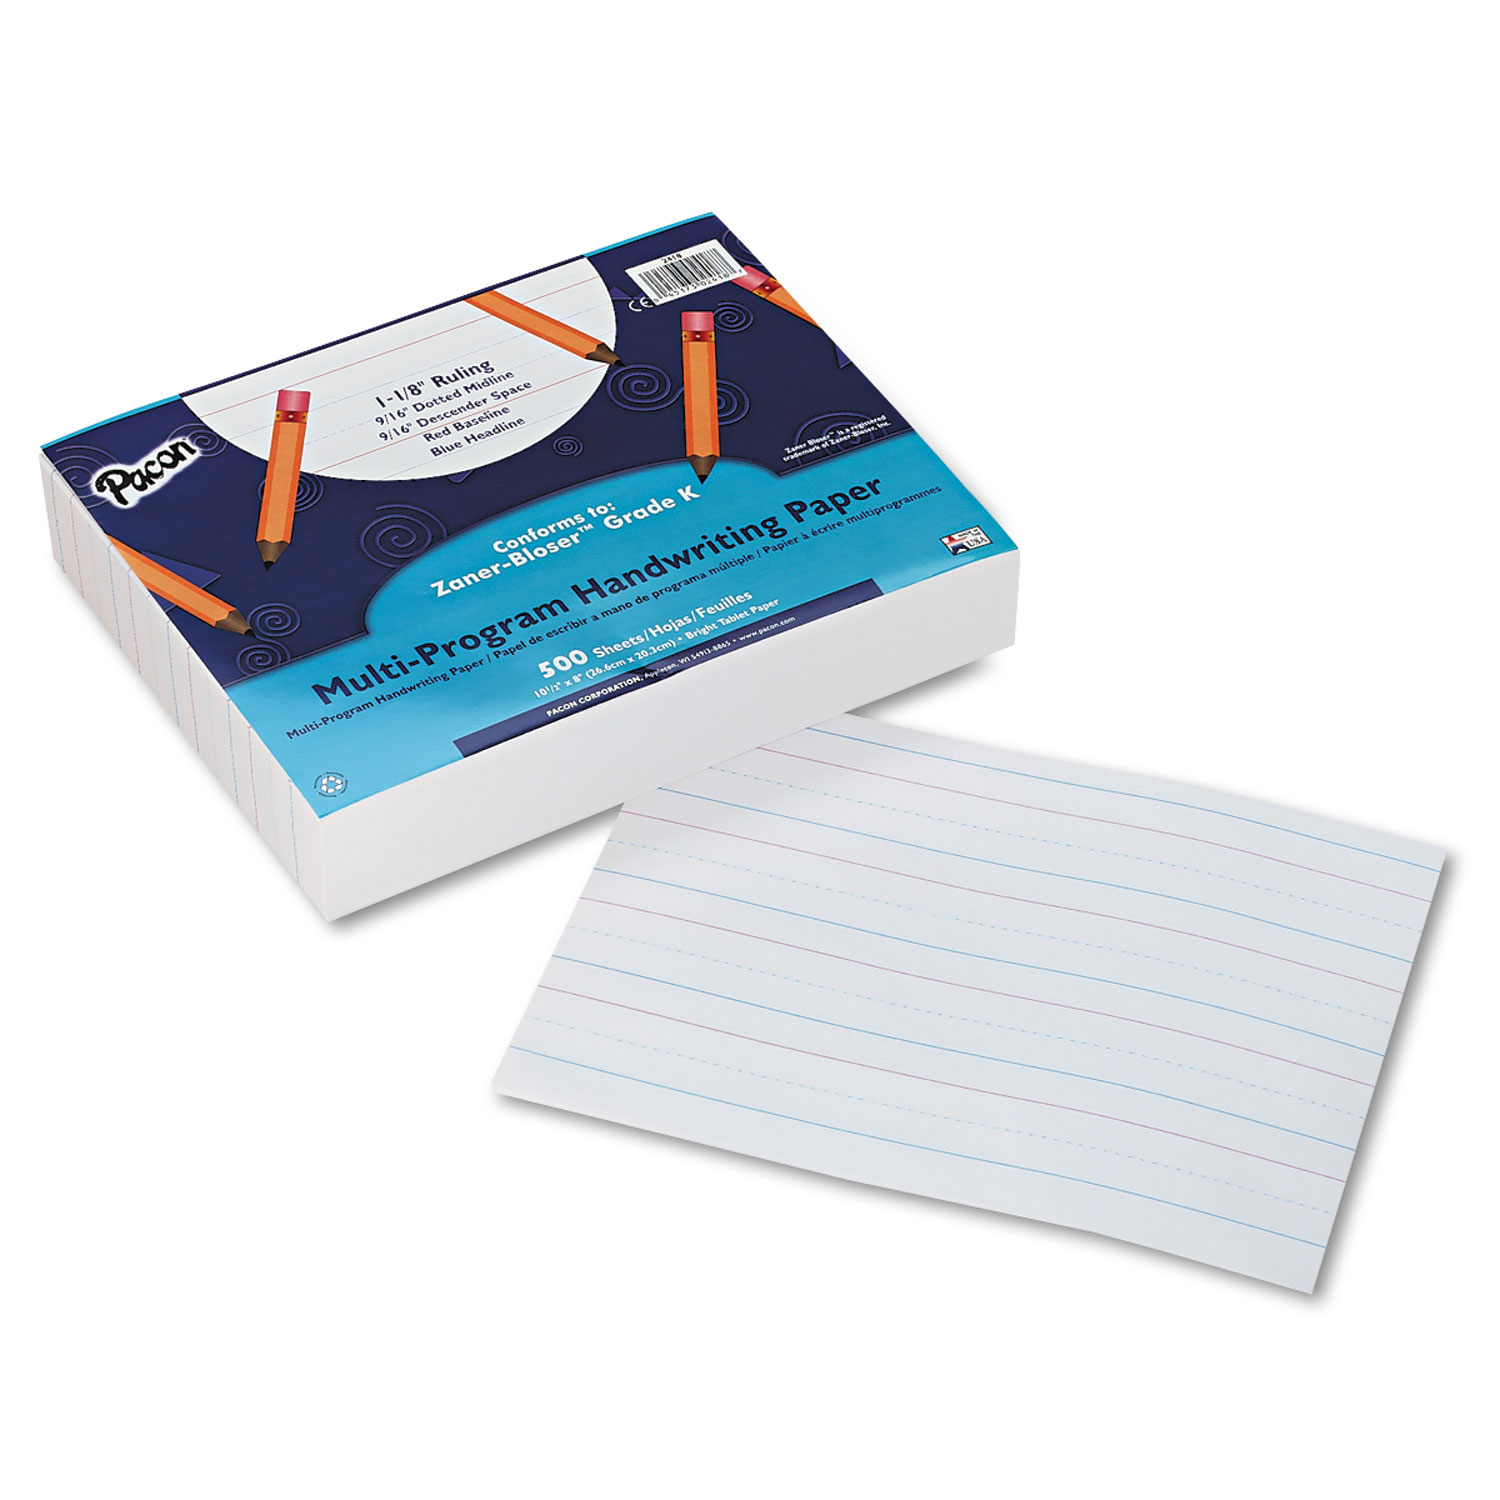 Multi-Program Handwriting Paper, 16 lb, 1 1/8" Long Rule, One-Sided, 8 x 10.5, 500/Pack